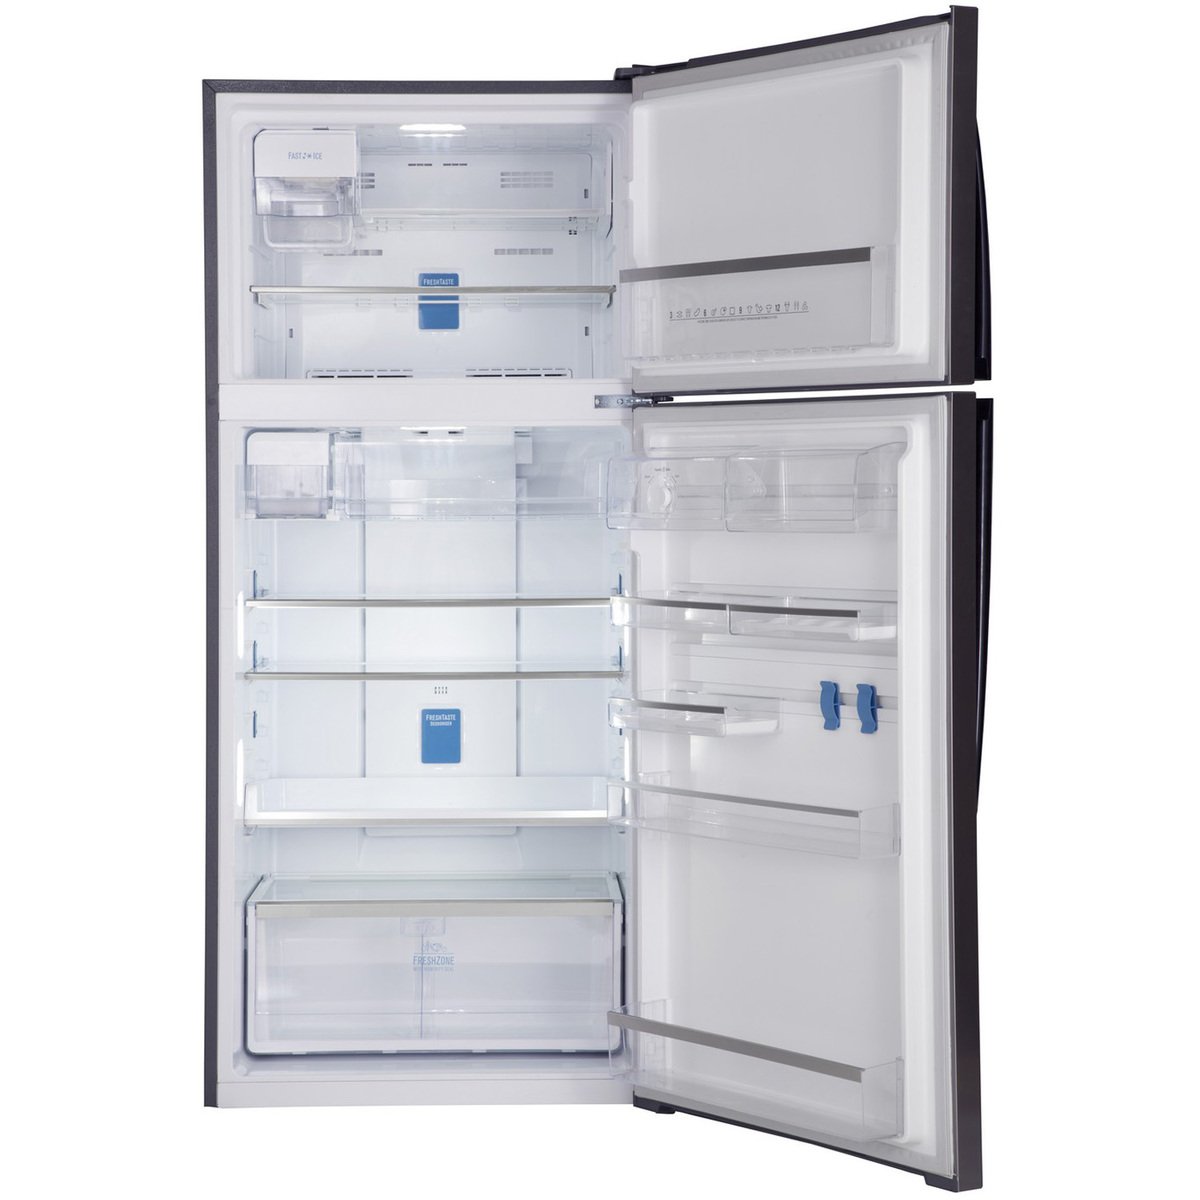 Electrolux Double Door Refrigeratorr EJ5750LOU 573Ltr